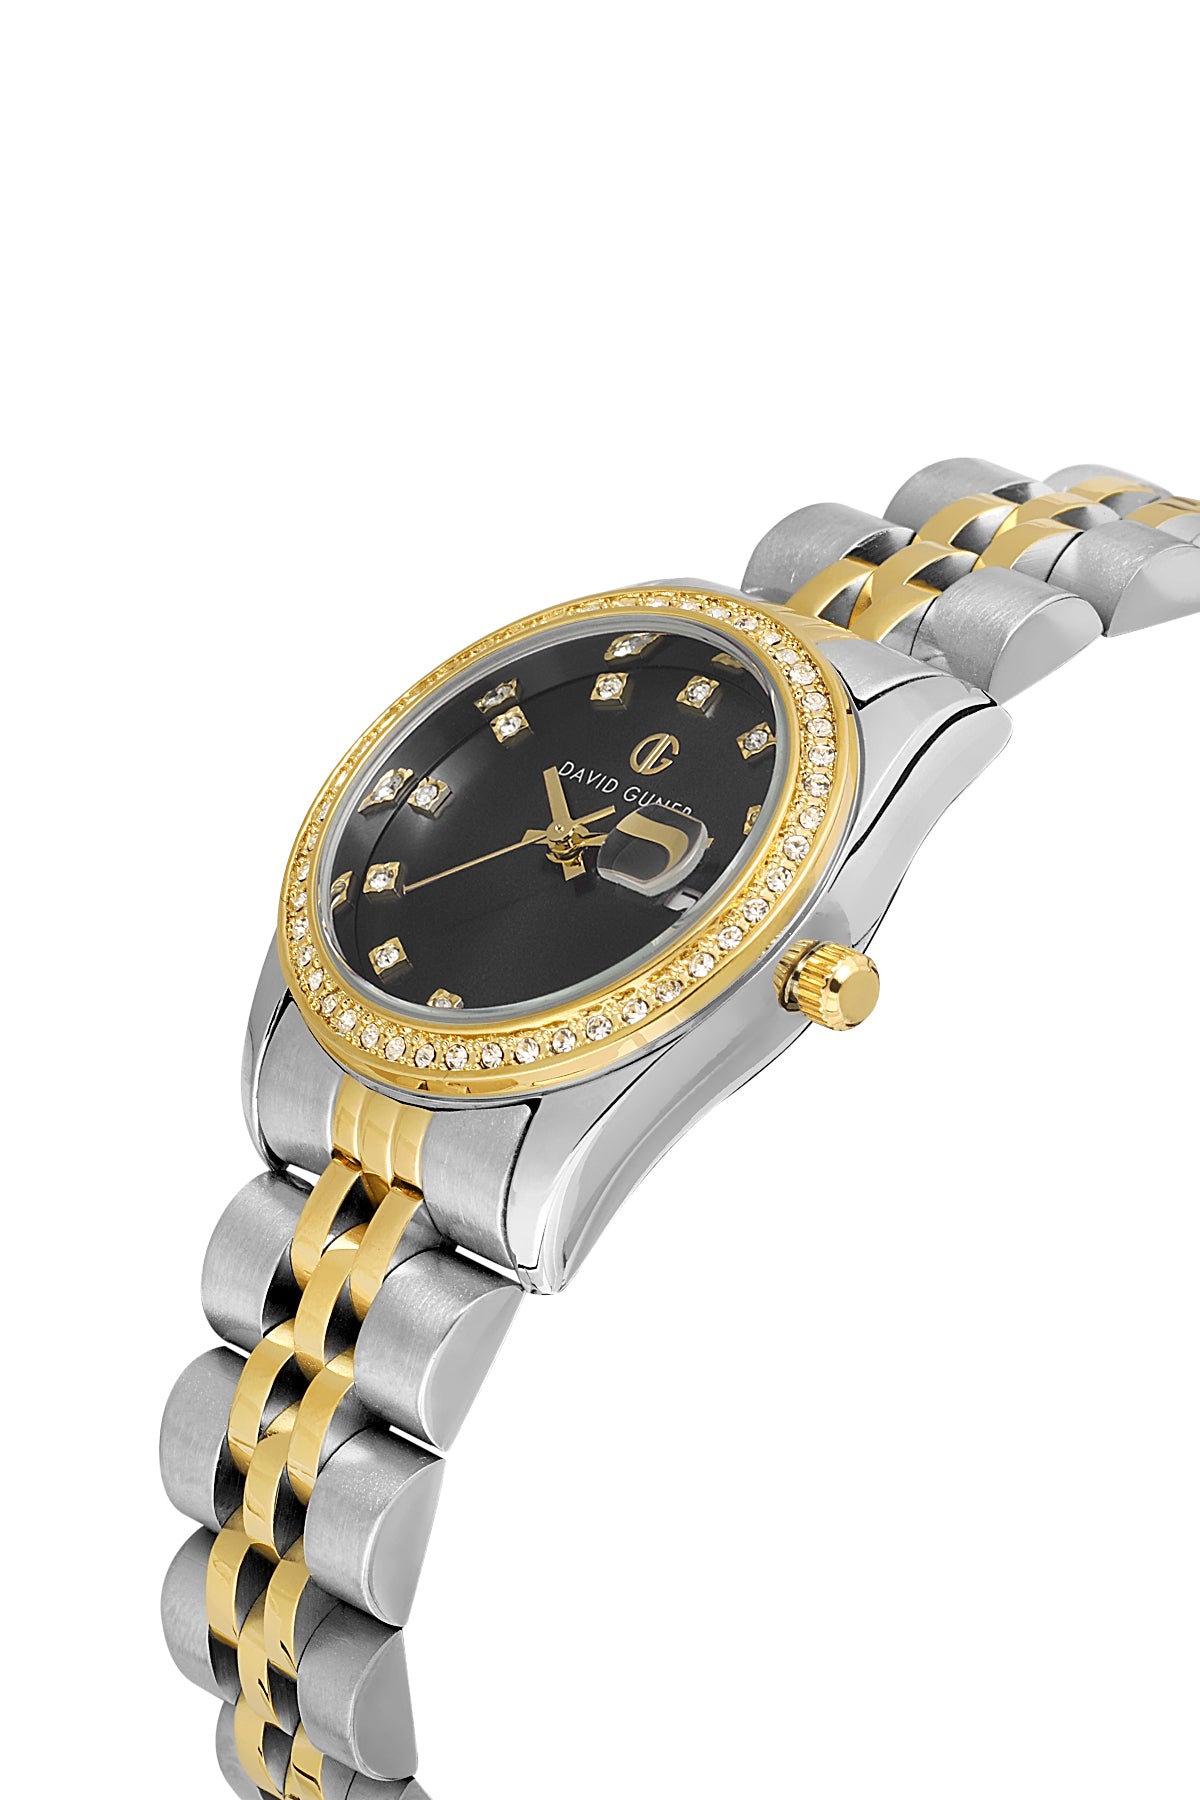 DAVID GUNER Black Dial Yellow White Coated Women's Wristwatch